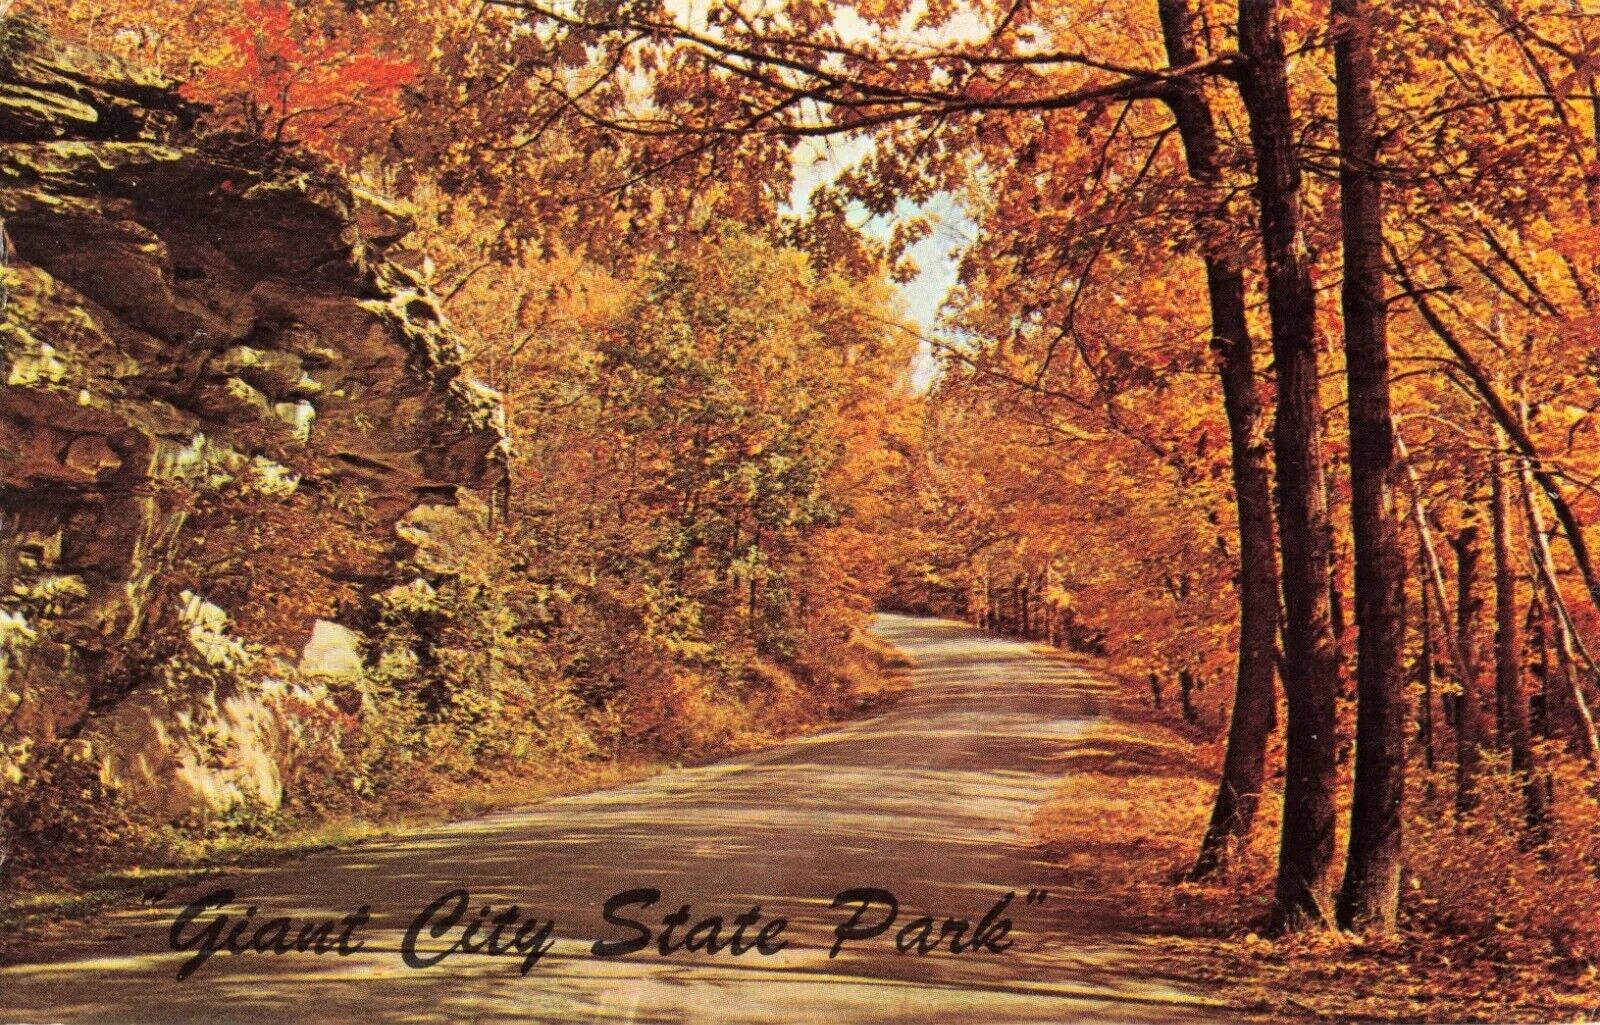 Road Through Giant City State Park - Fall Autumn Colors - Illinois IL - Postcard